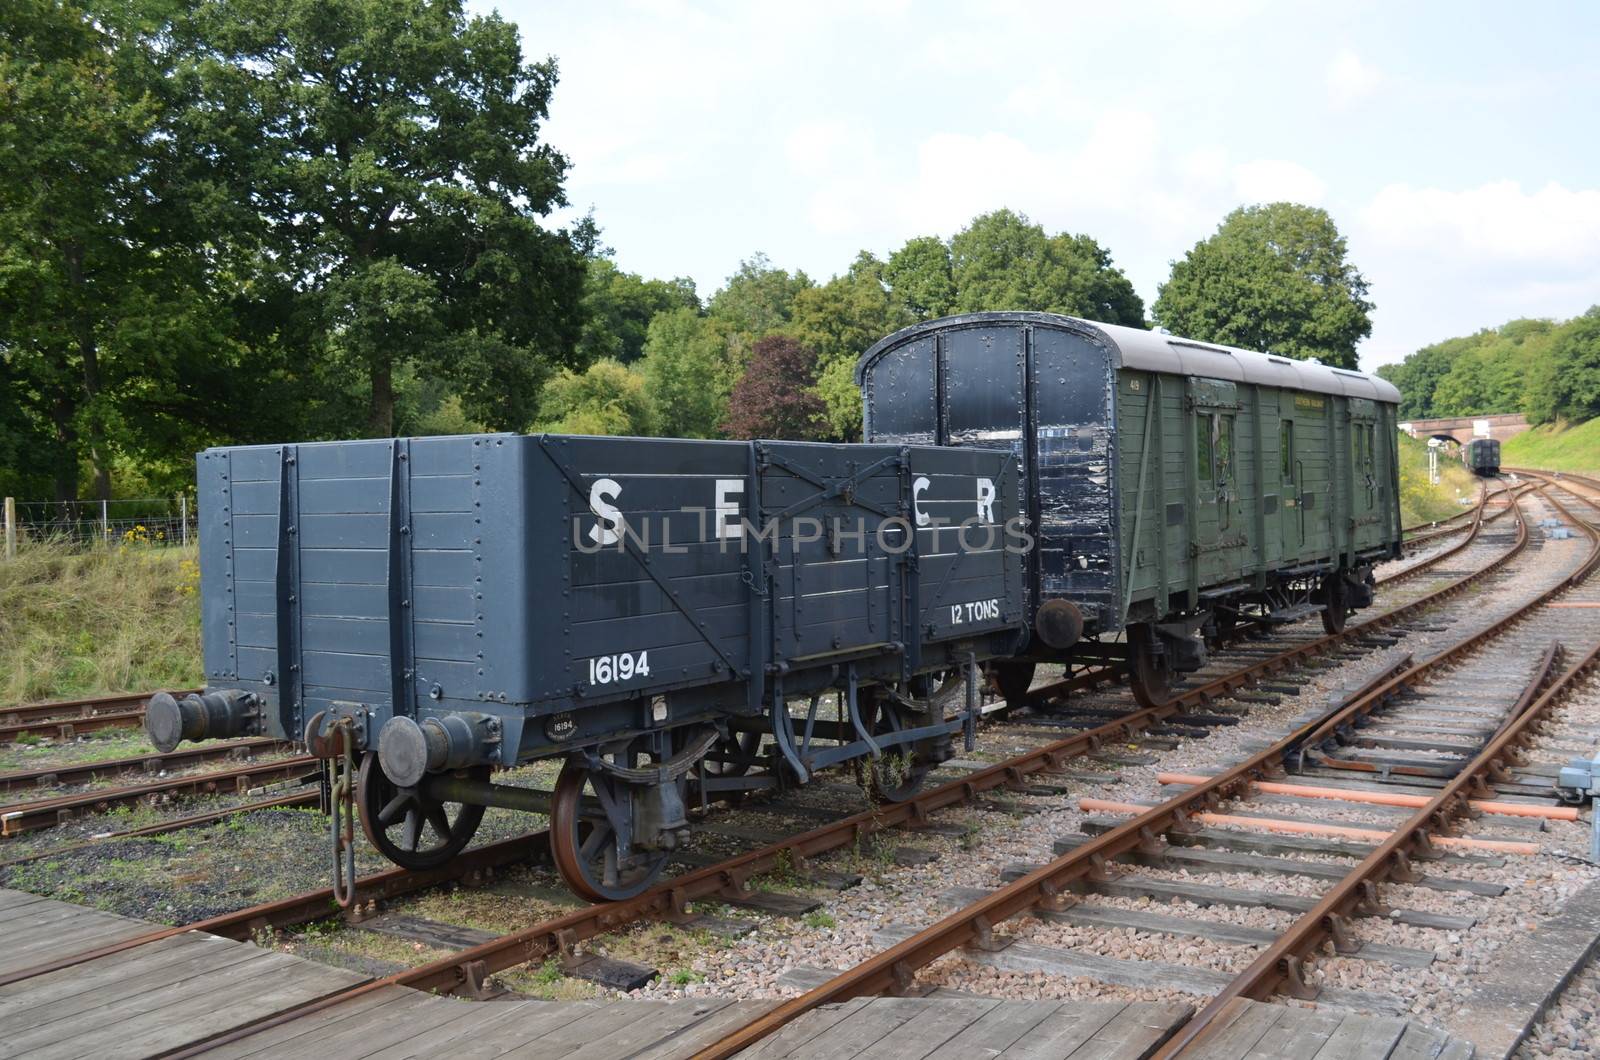 Old British railway goods wagons.